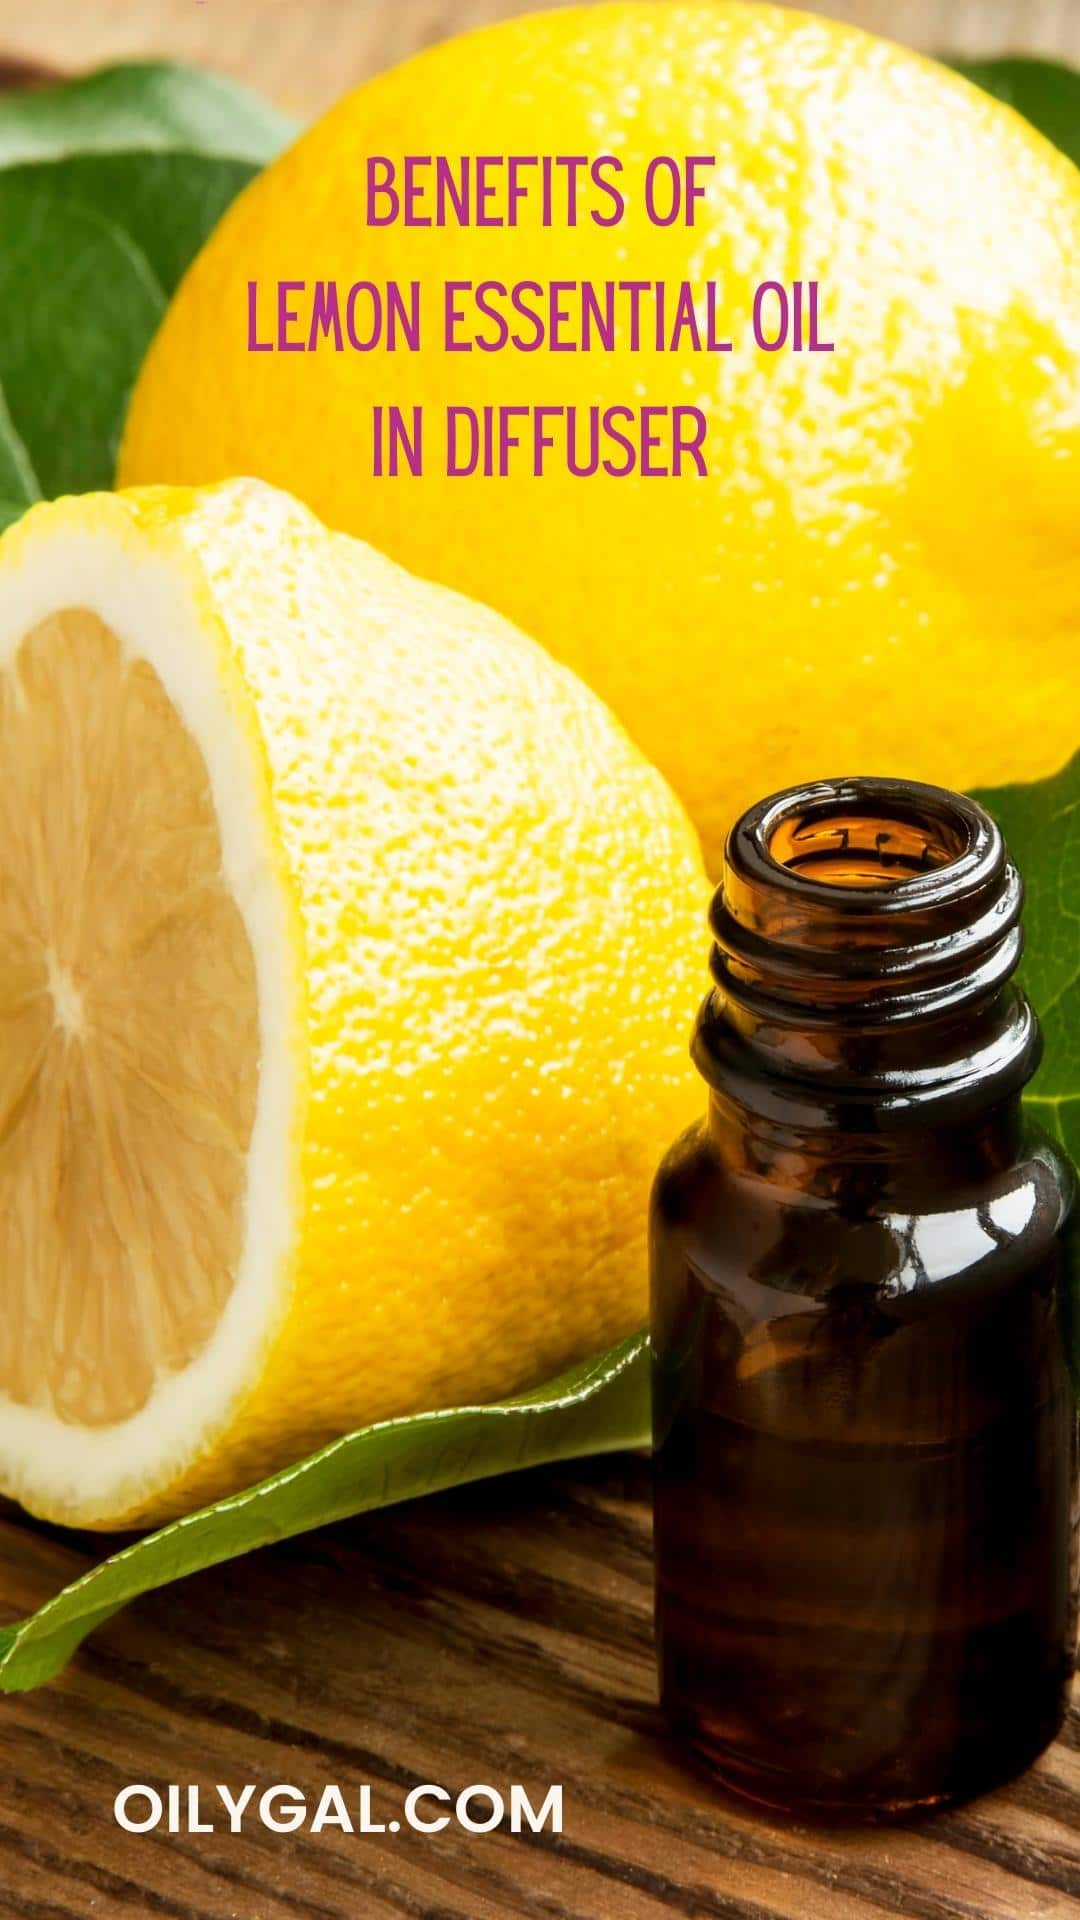 Benefits of Lemon Essential Oil in Diffuser